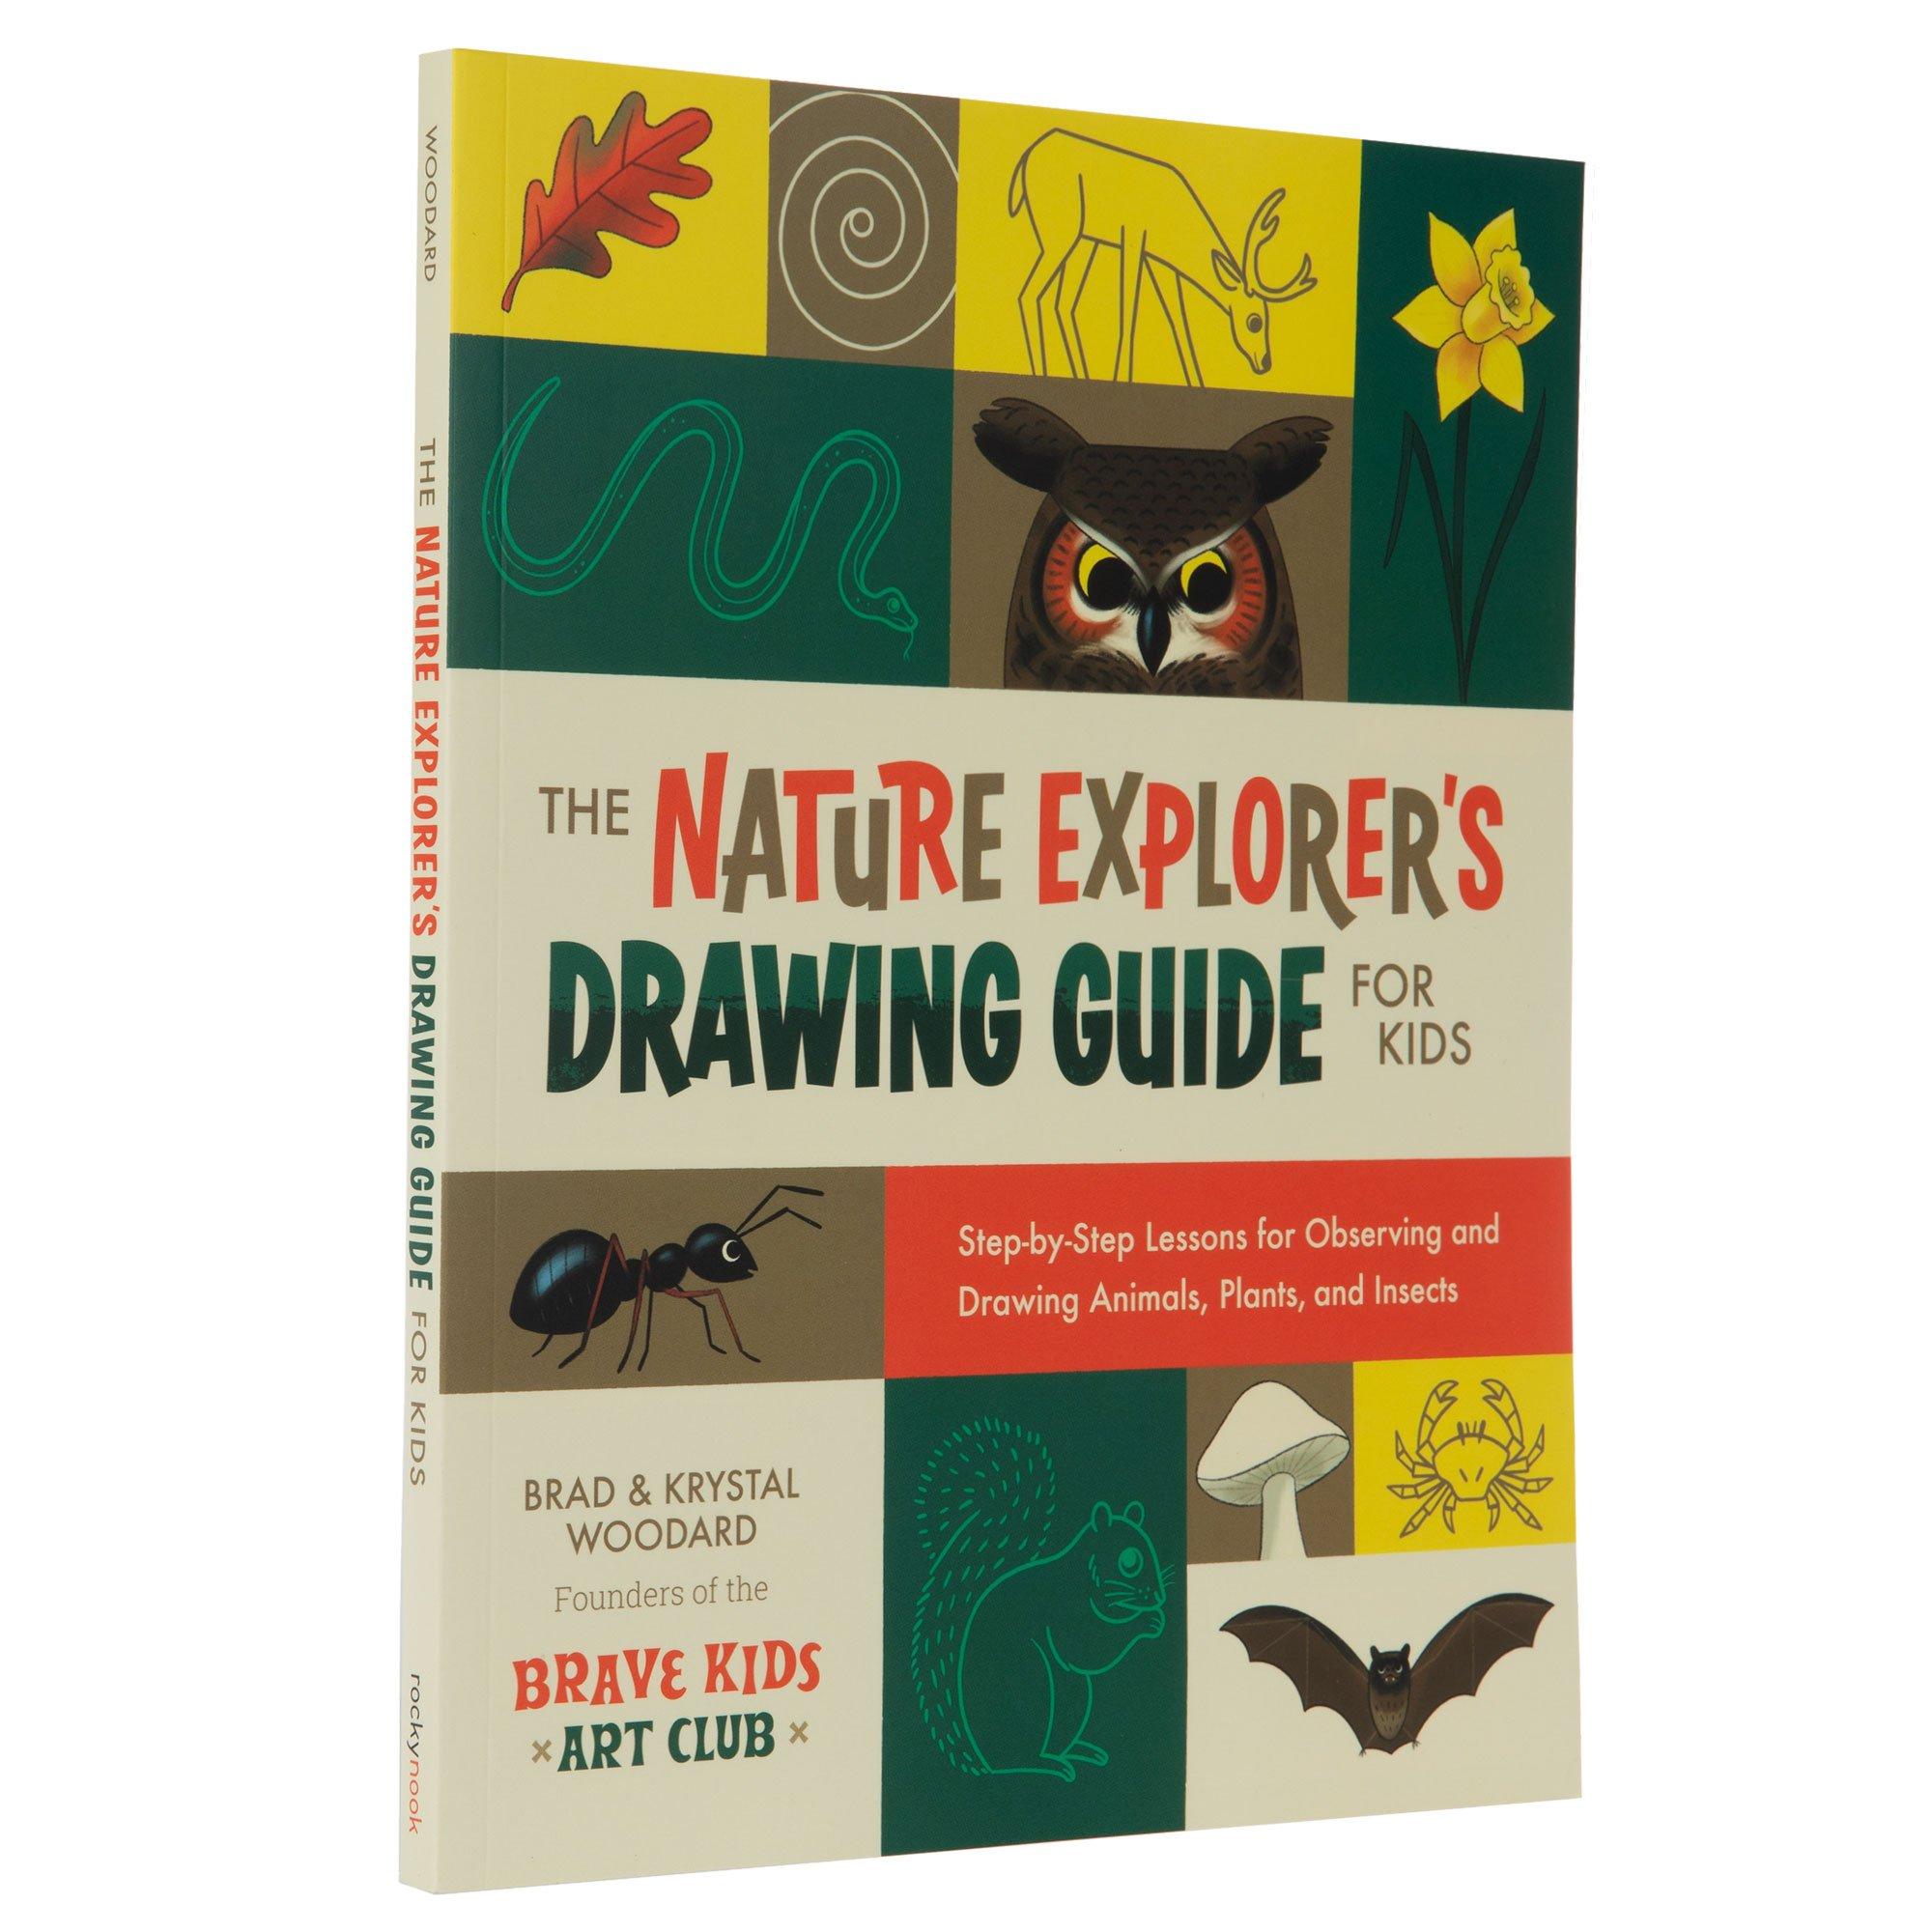 The Nature Explorer's Sketchbook